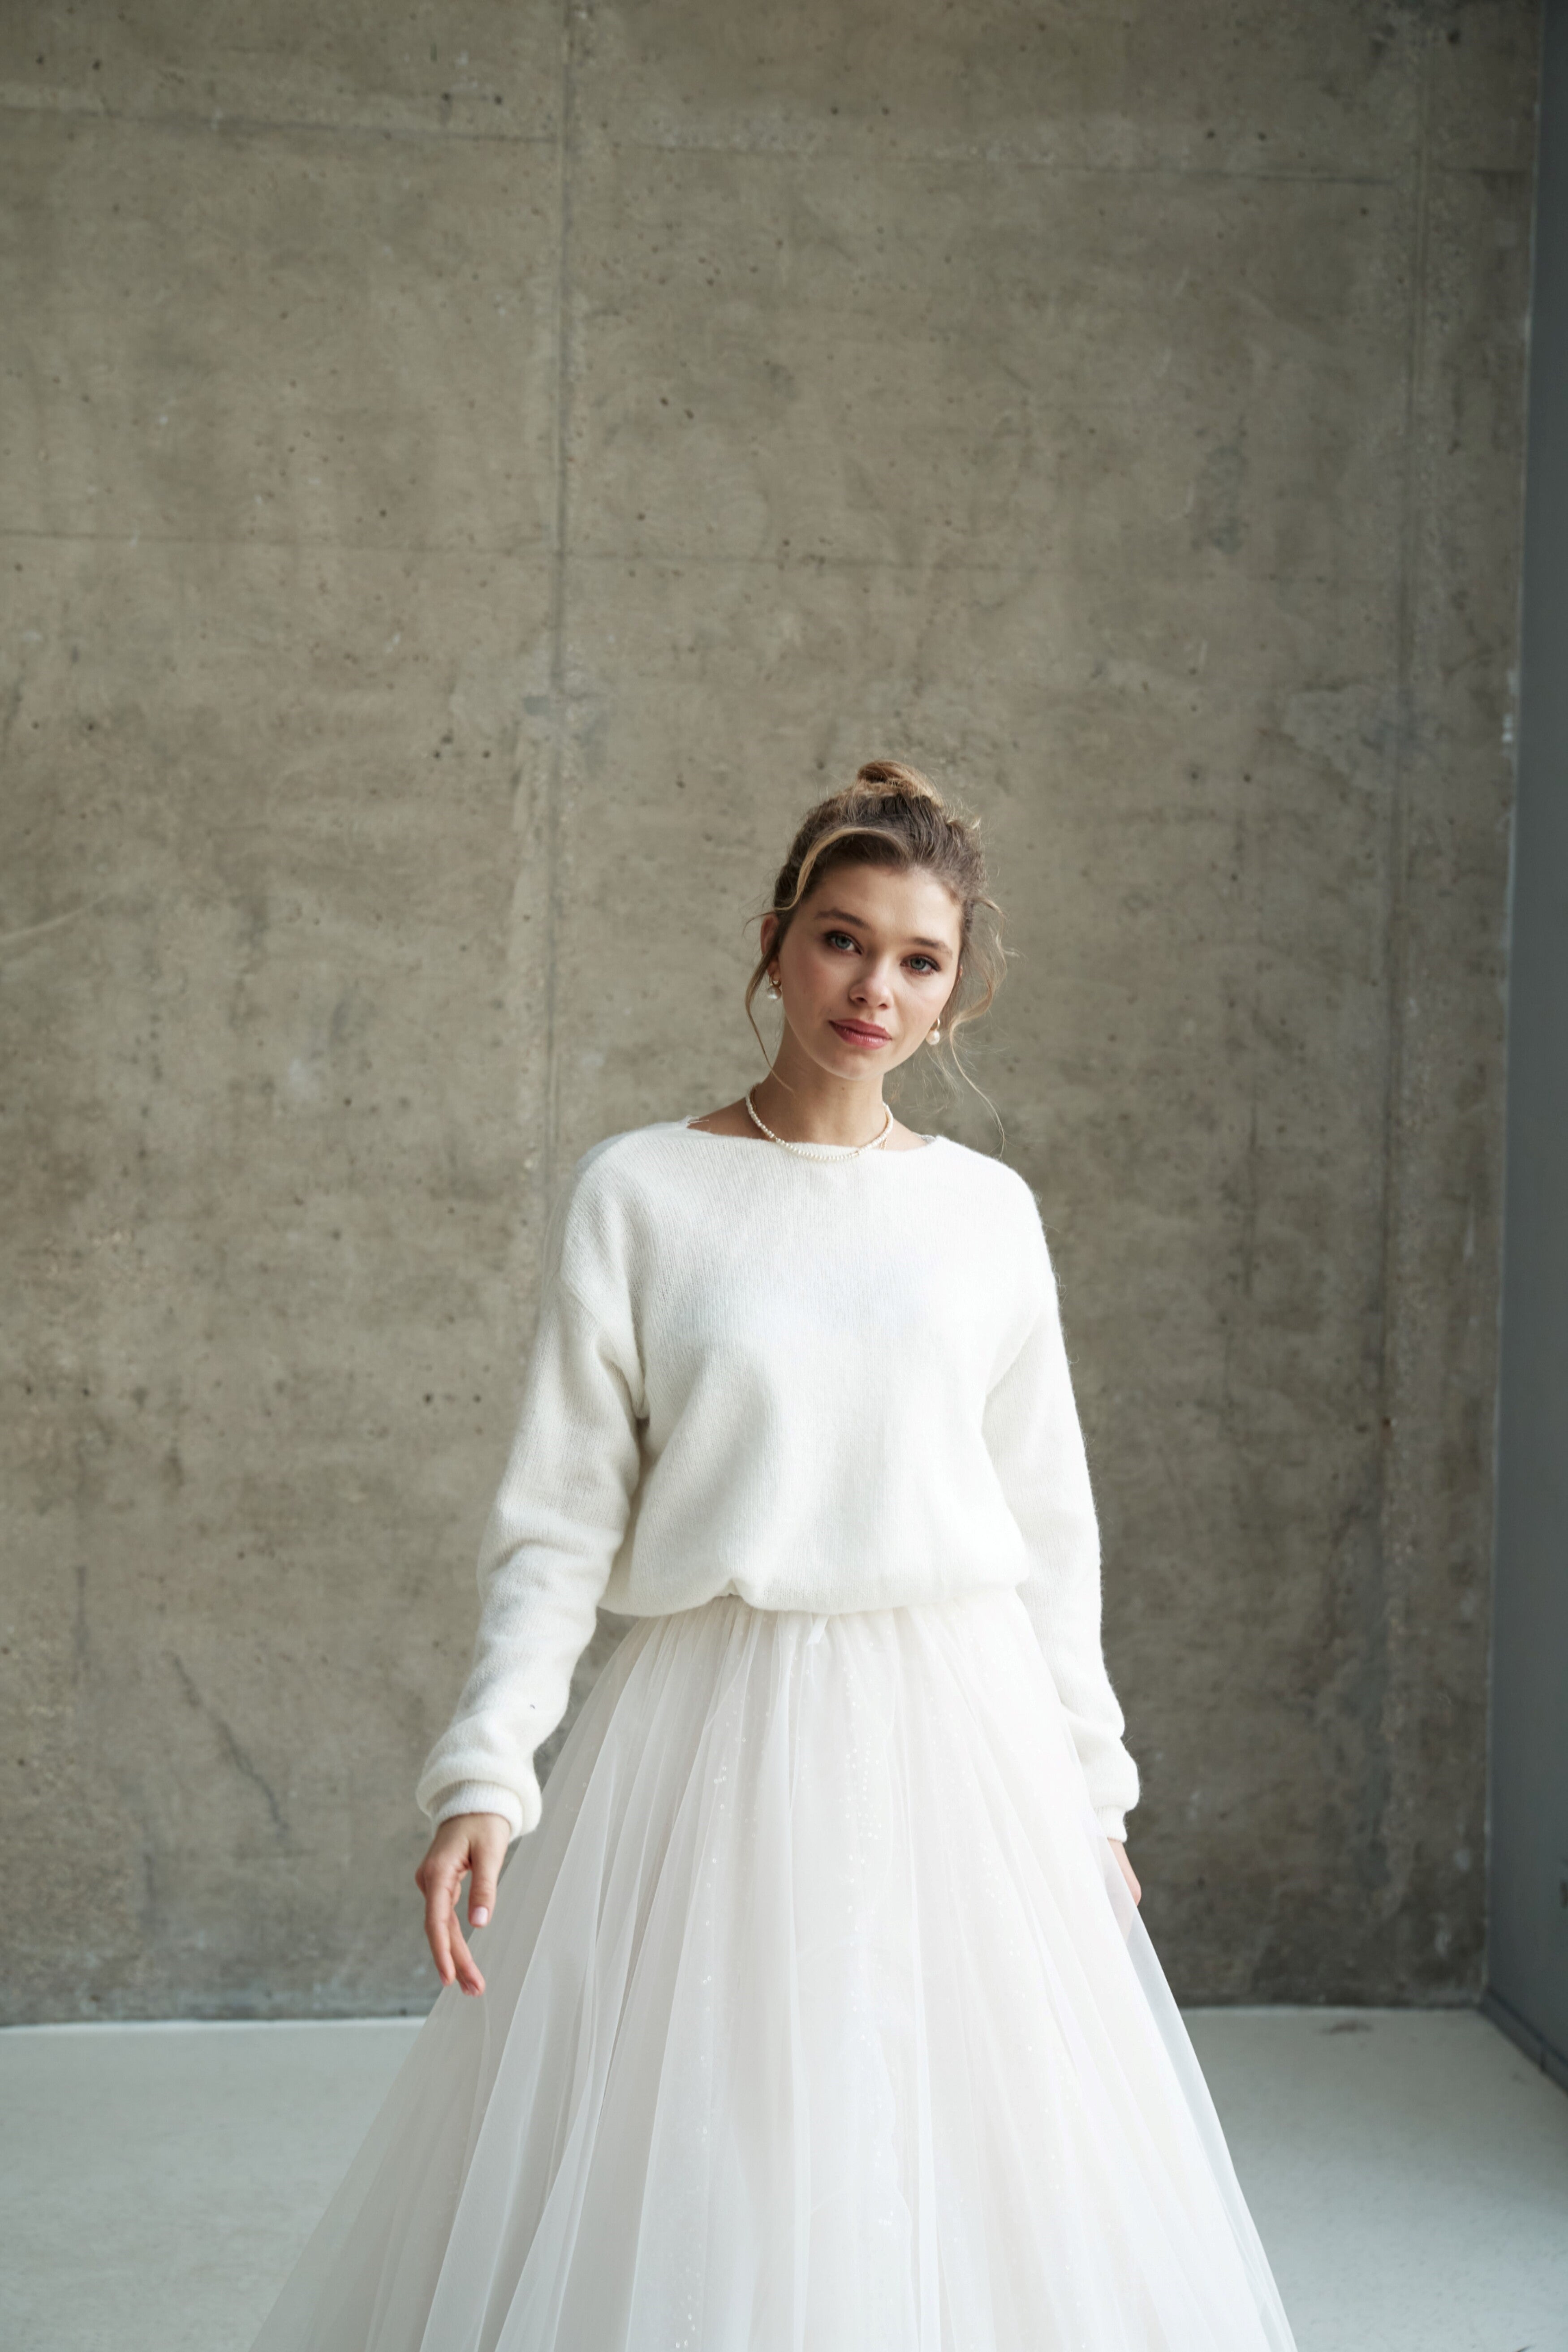 Bridal Sweater with Lace - ArtPodium Studio